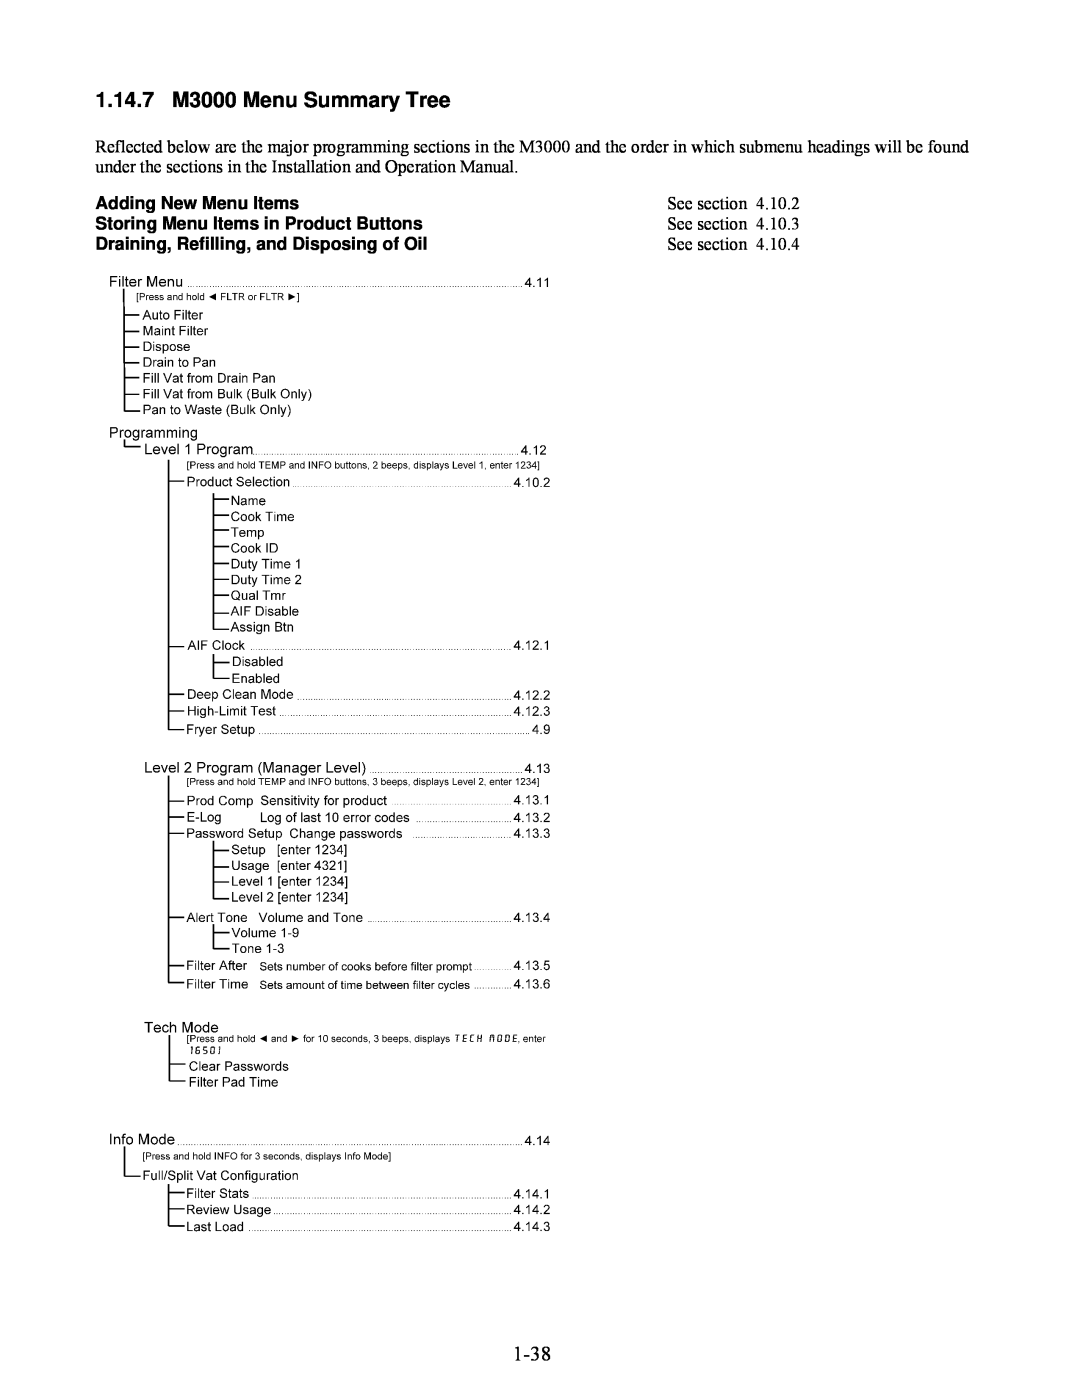 Frymaster BIELA14 manual 1.14.7 M3000 Menu Summary Tree, Adding New Menu Items, Storing Menu Items in Product Buttons 